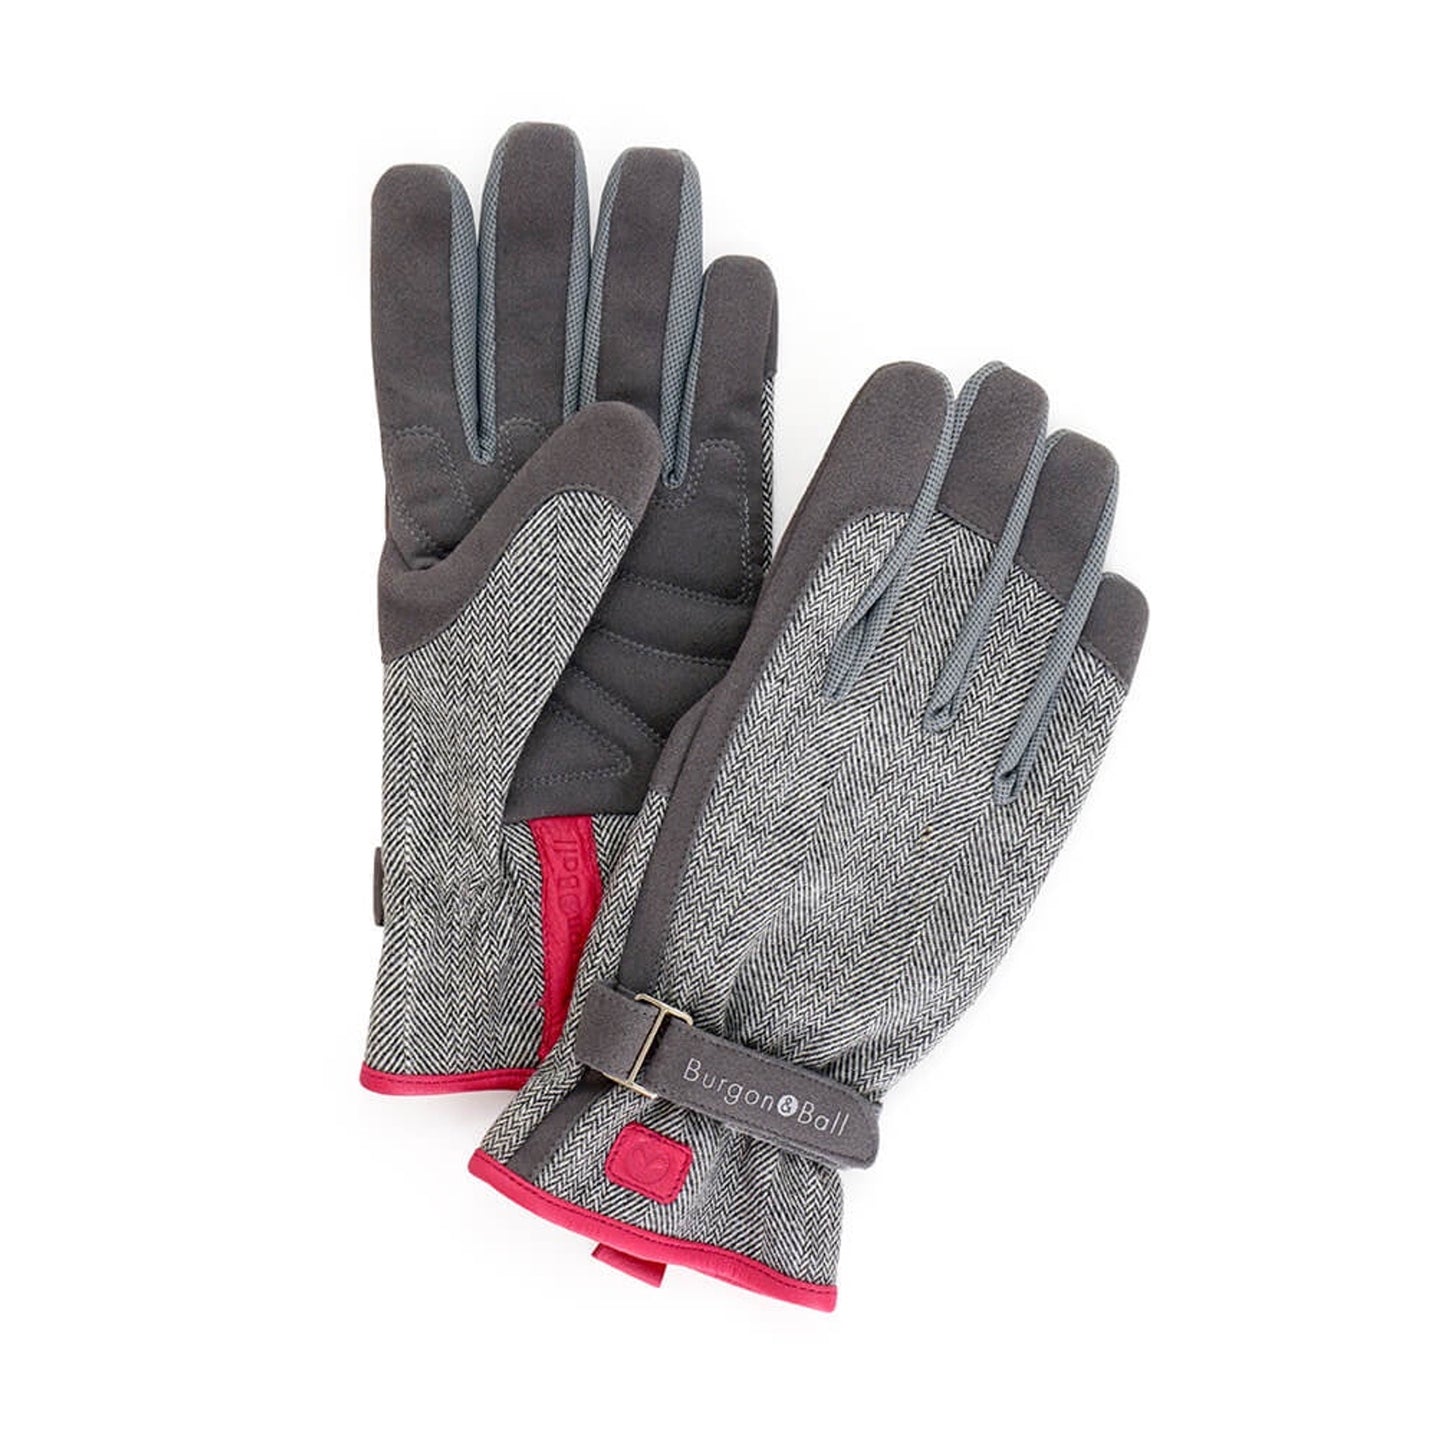 Women's Gardening Glove - Grey Tweed